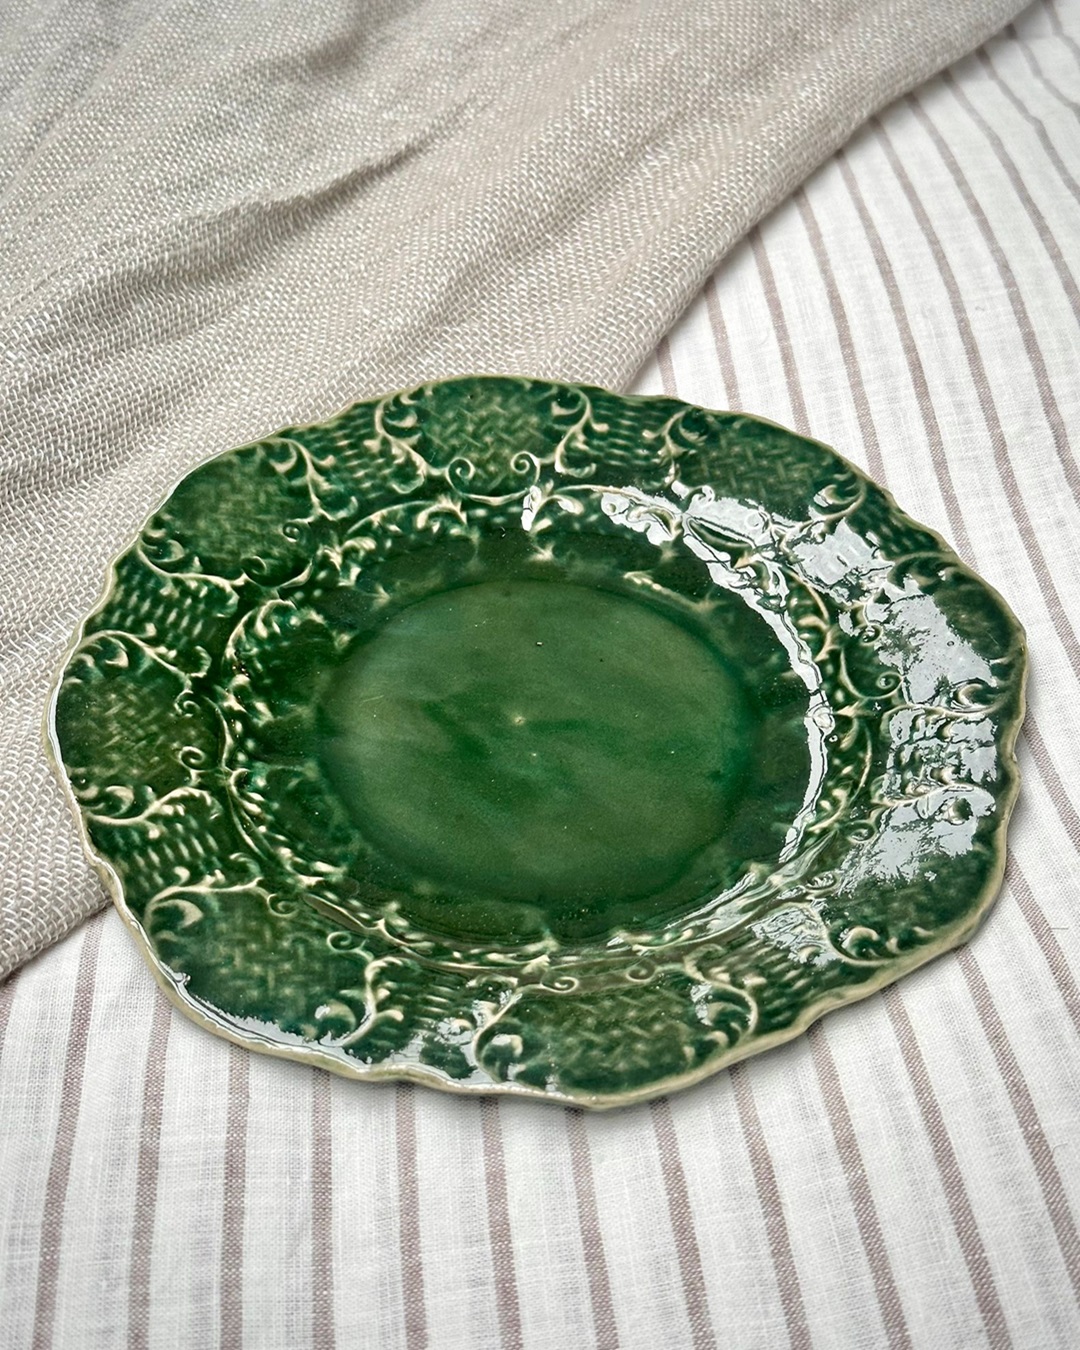 Dark green decorative plate on bed